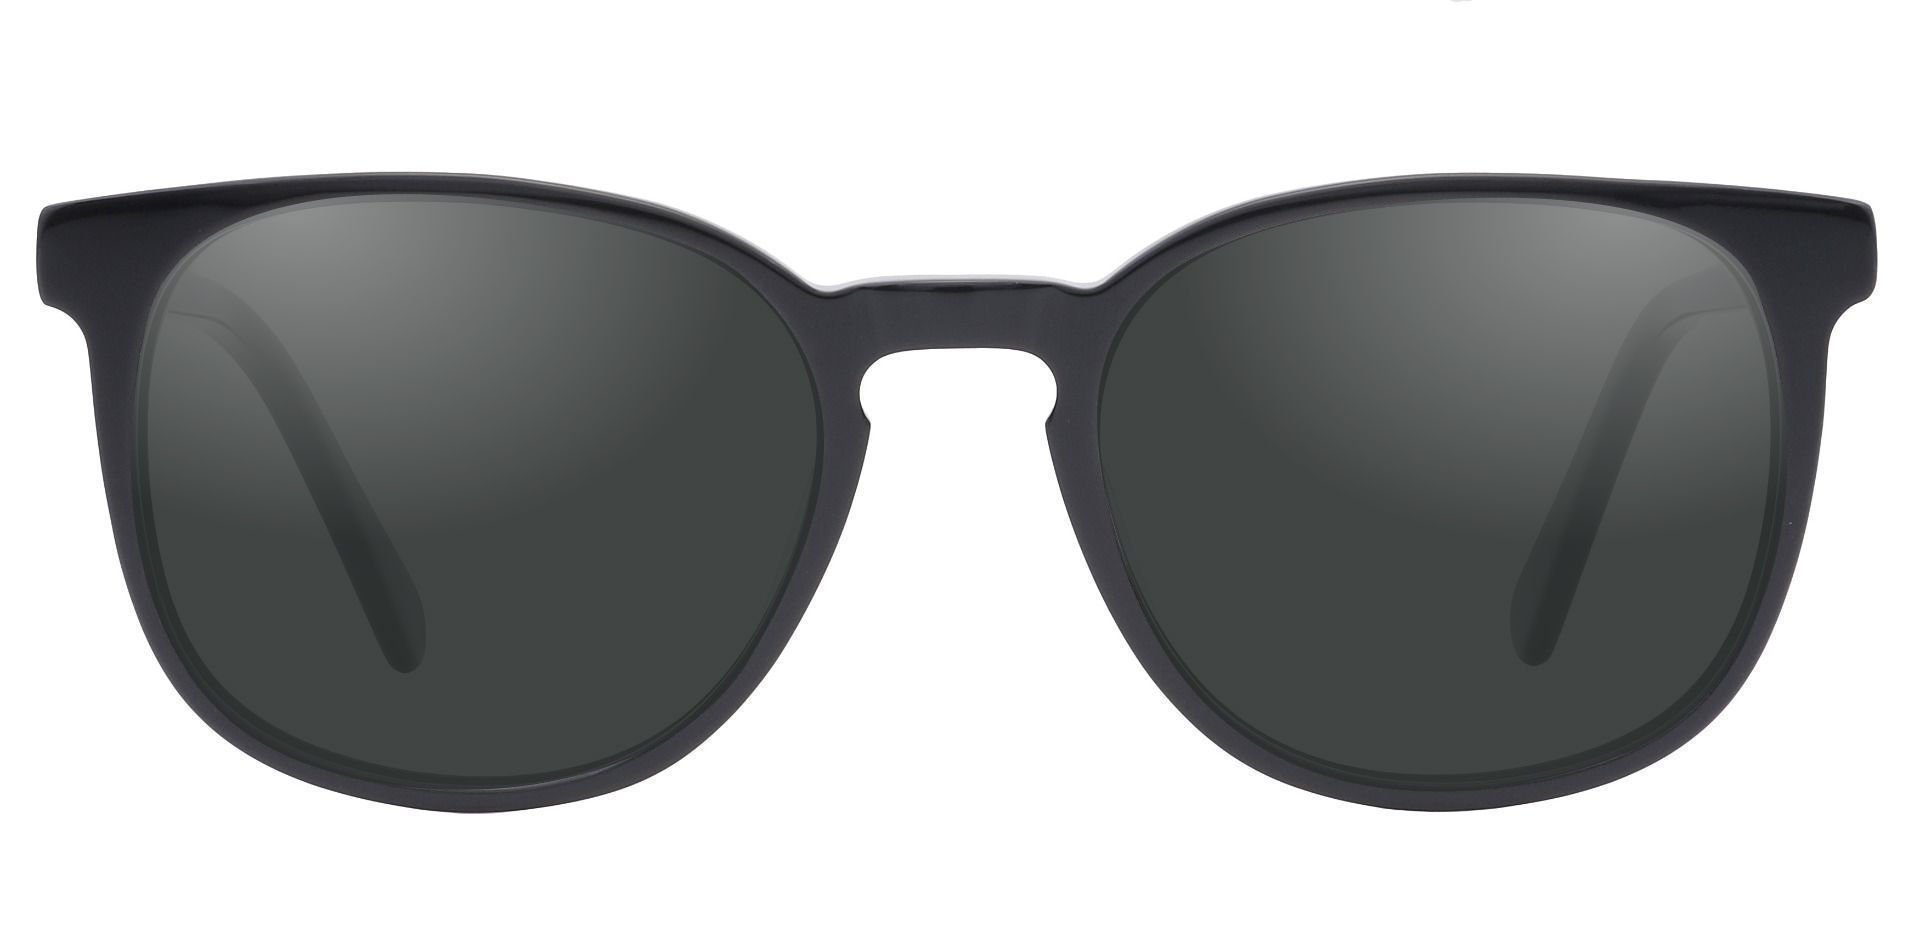 Nebula Round Prescription Sunglasses - Black Frame With Gray Lenses